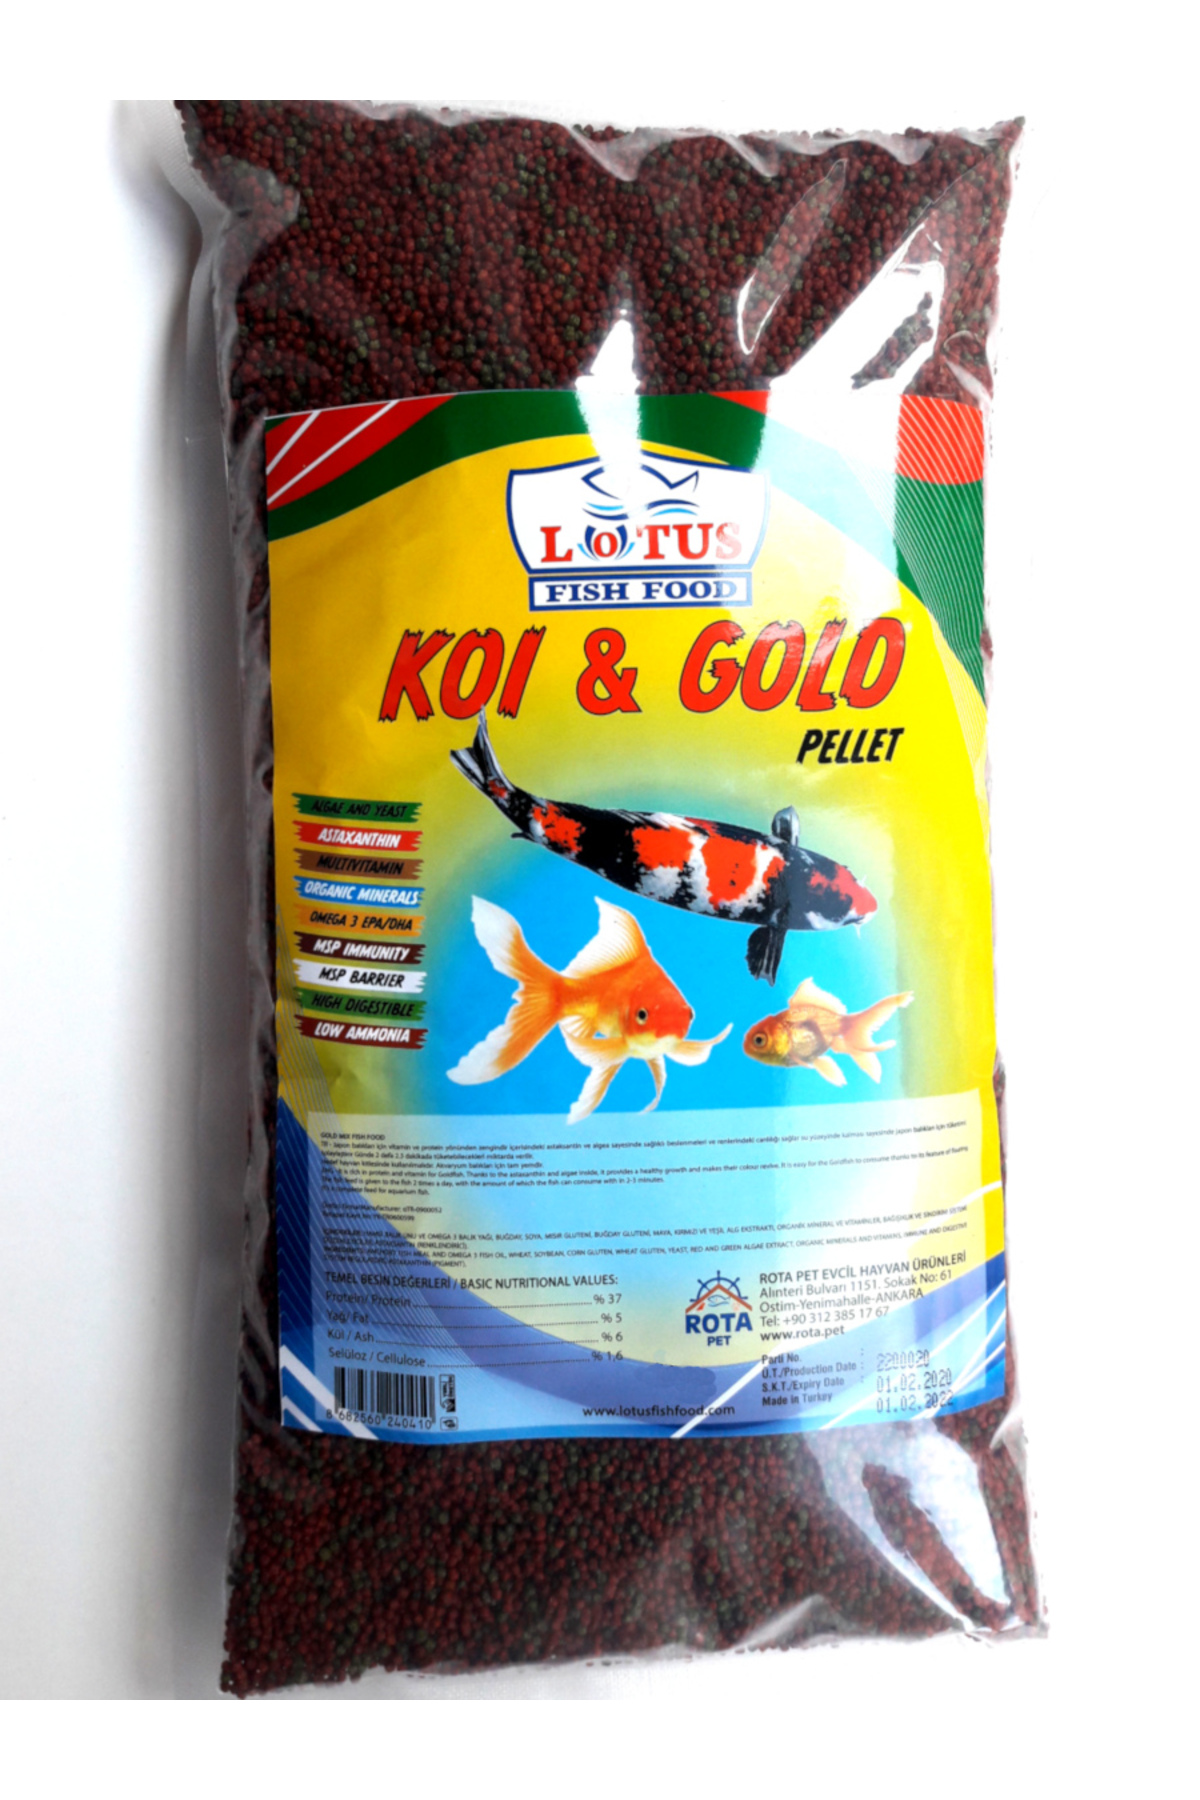 Lotus %37 Kajero 2 adet 860 gr Japon Baligi Yemi, 125 ml Kutu Goldy Mix Granules, Berraklastirici